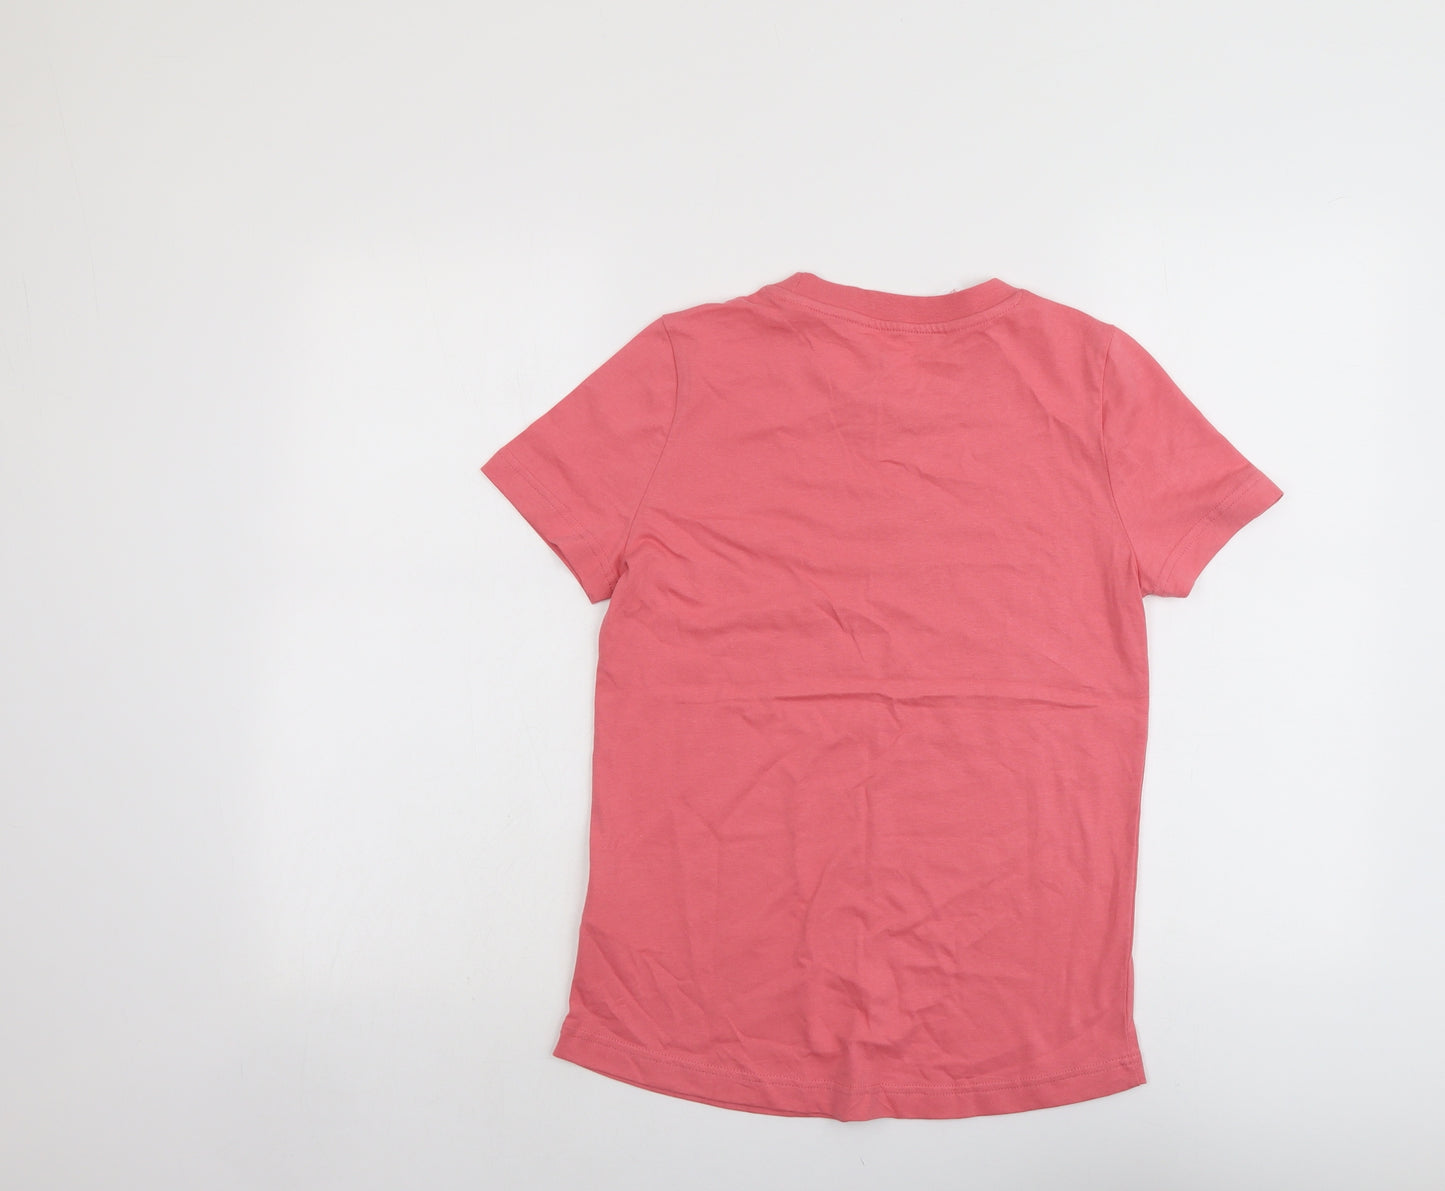 adidas Girls Pink Cotton Basic T-Shirt Size 13-14 Years Round Neck Pullover